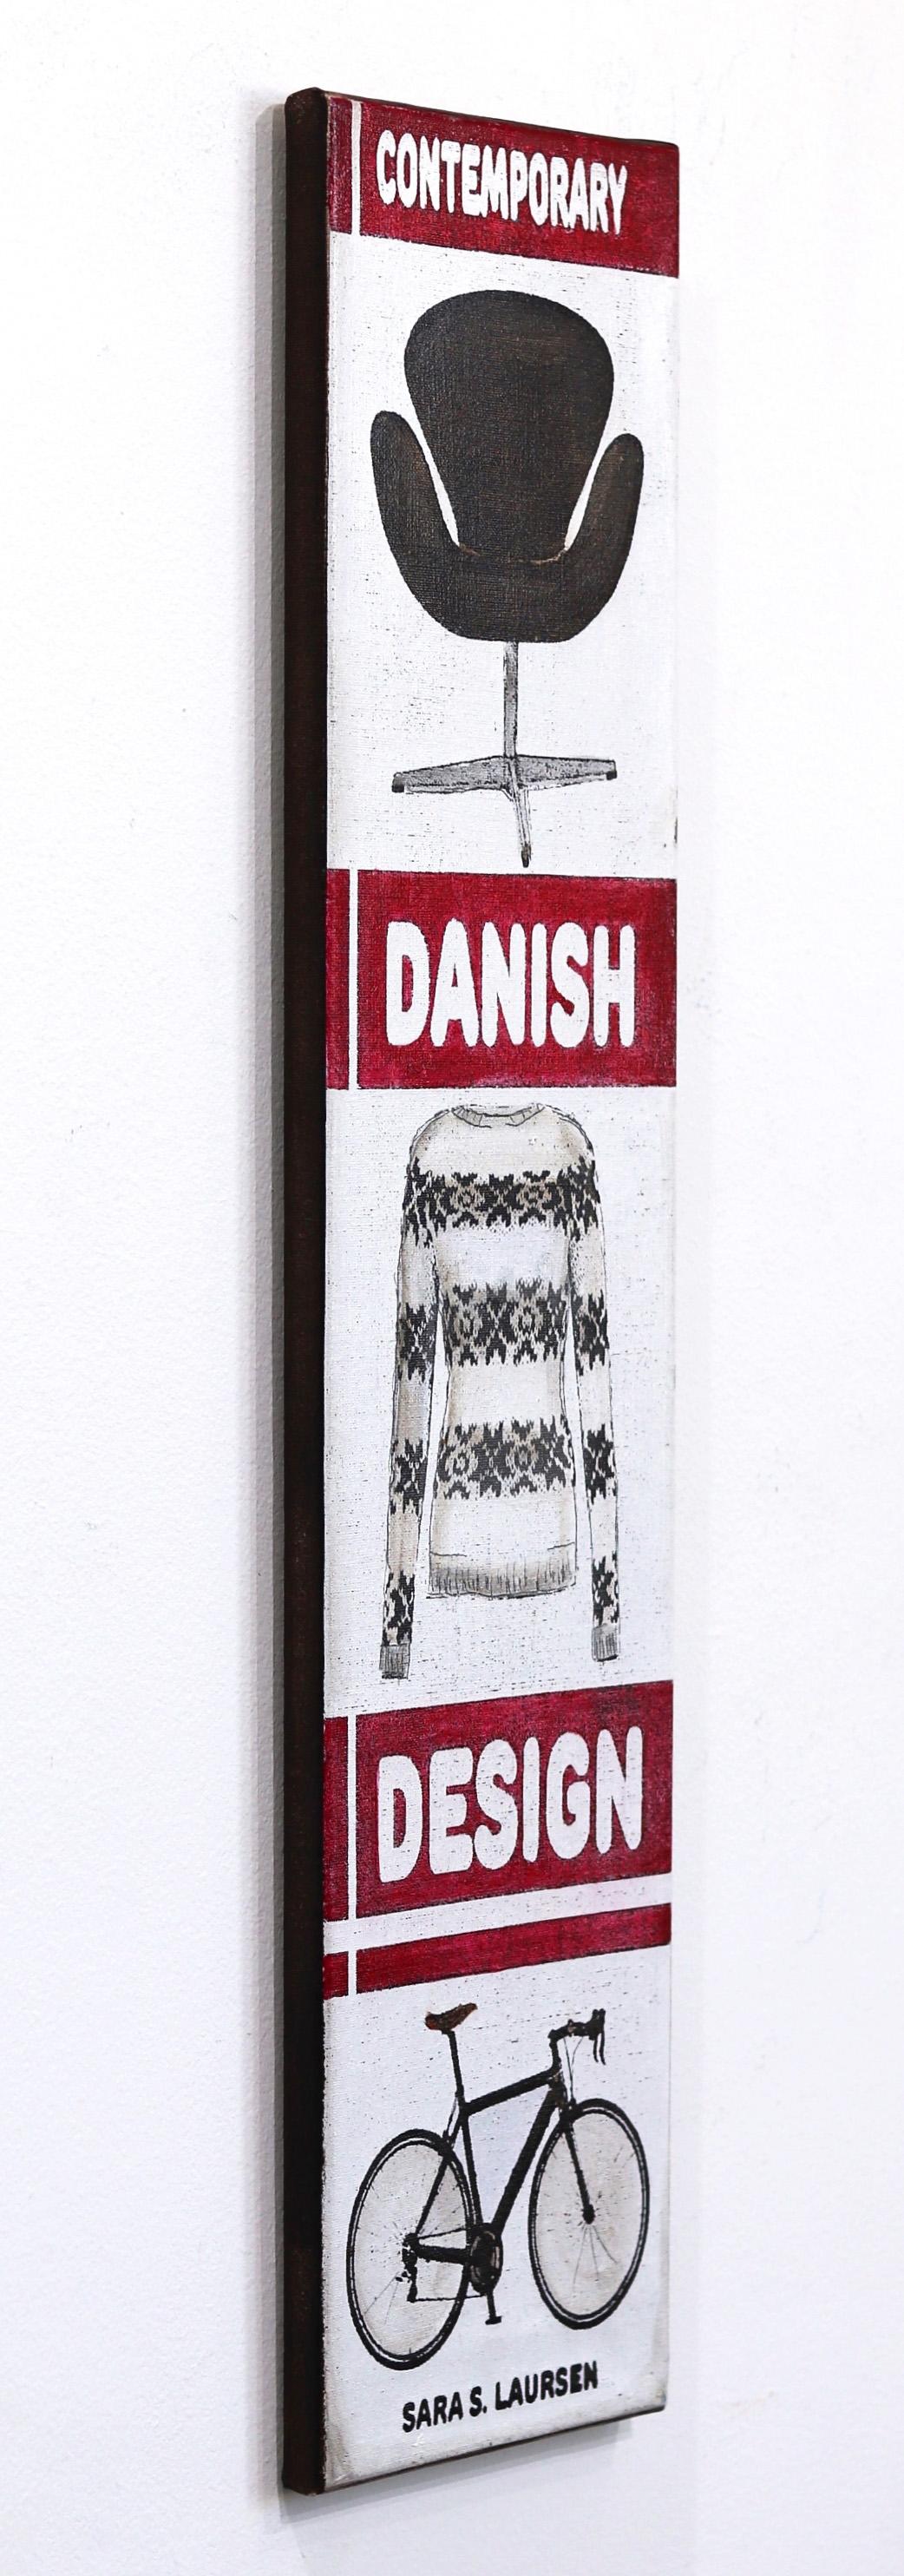 Danish Design - Original Mid Century Modern Book Artwork on Canvas - Pop Art Painting by Carl Smith